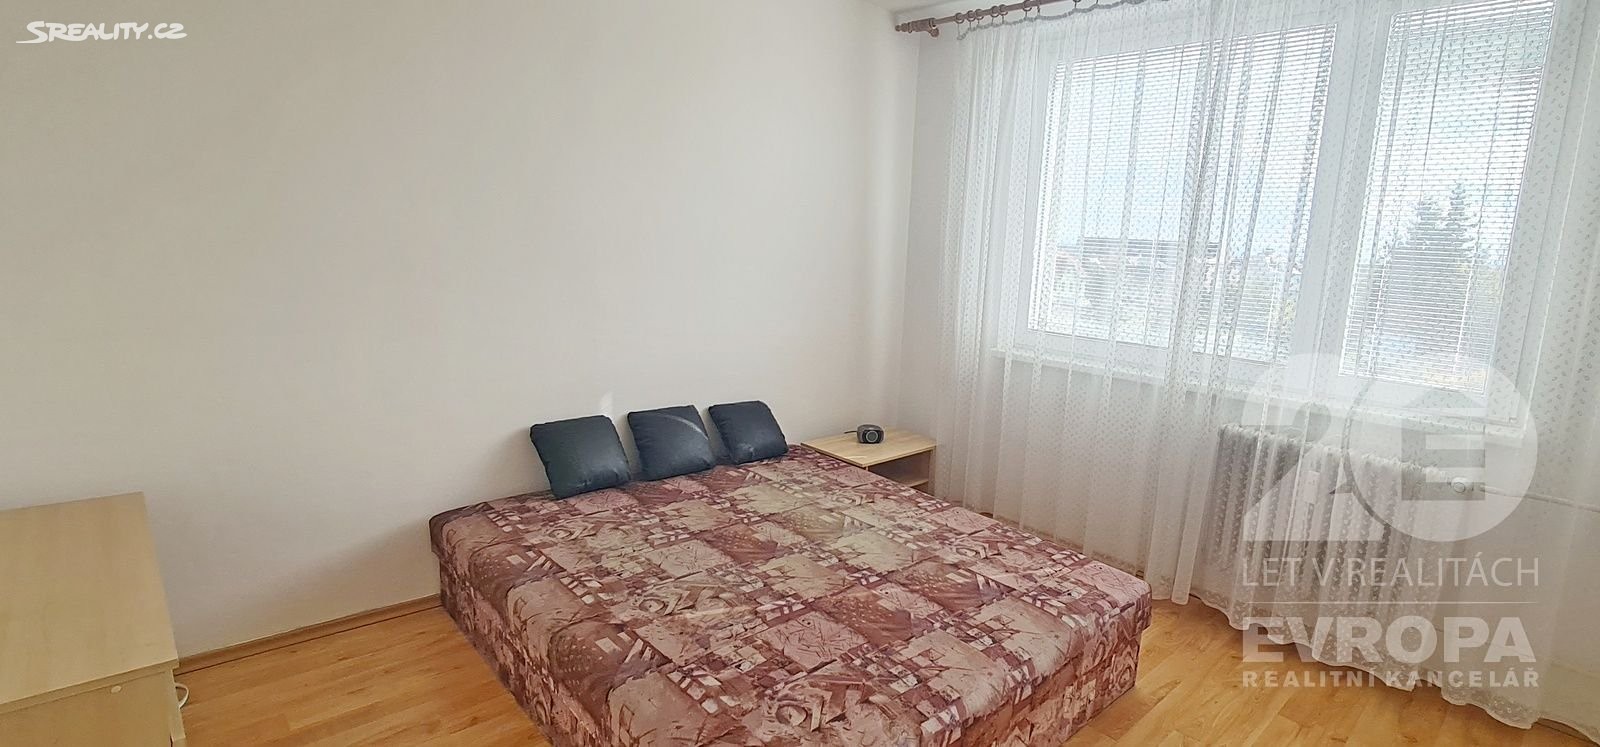 Pronájem bytu 3+1 71 m², Schweitzerova, Olomouc - Povel